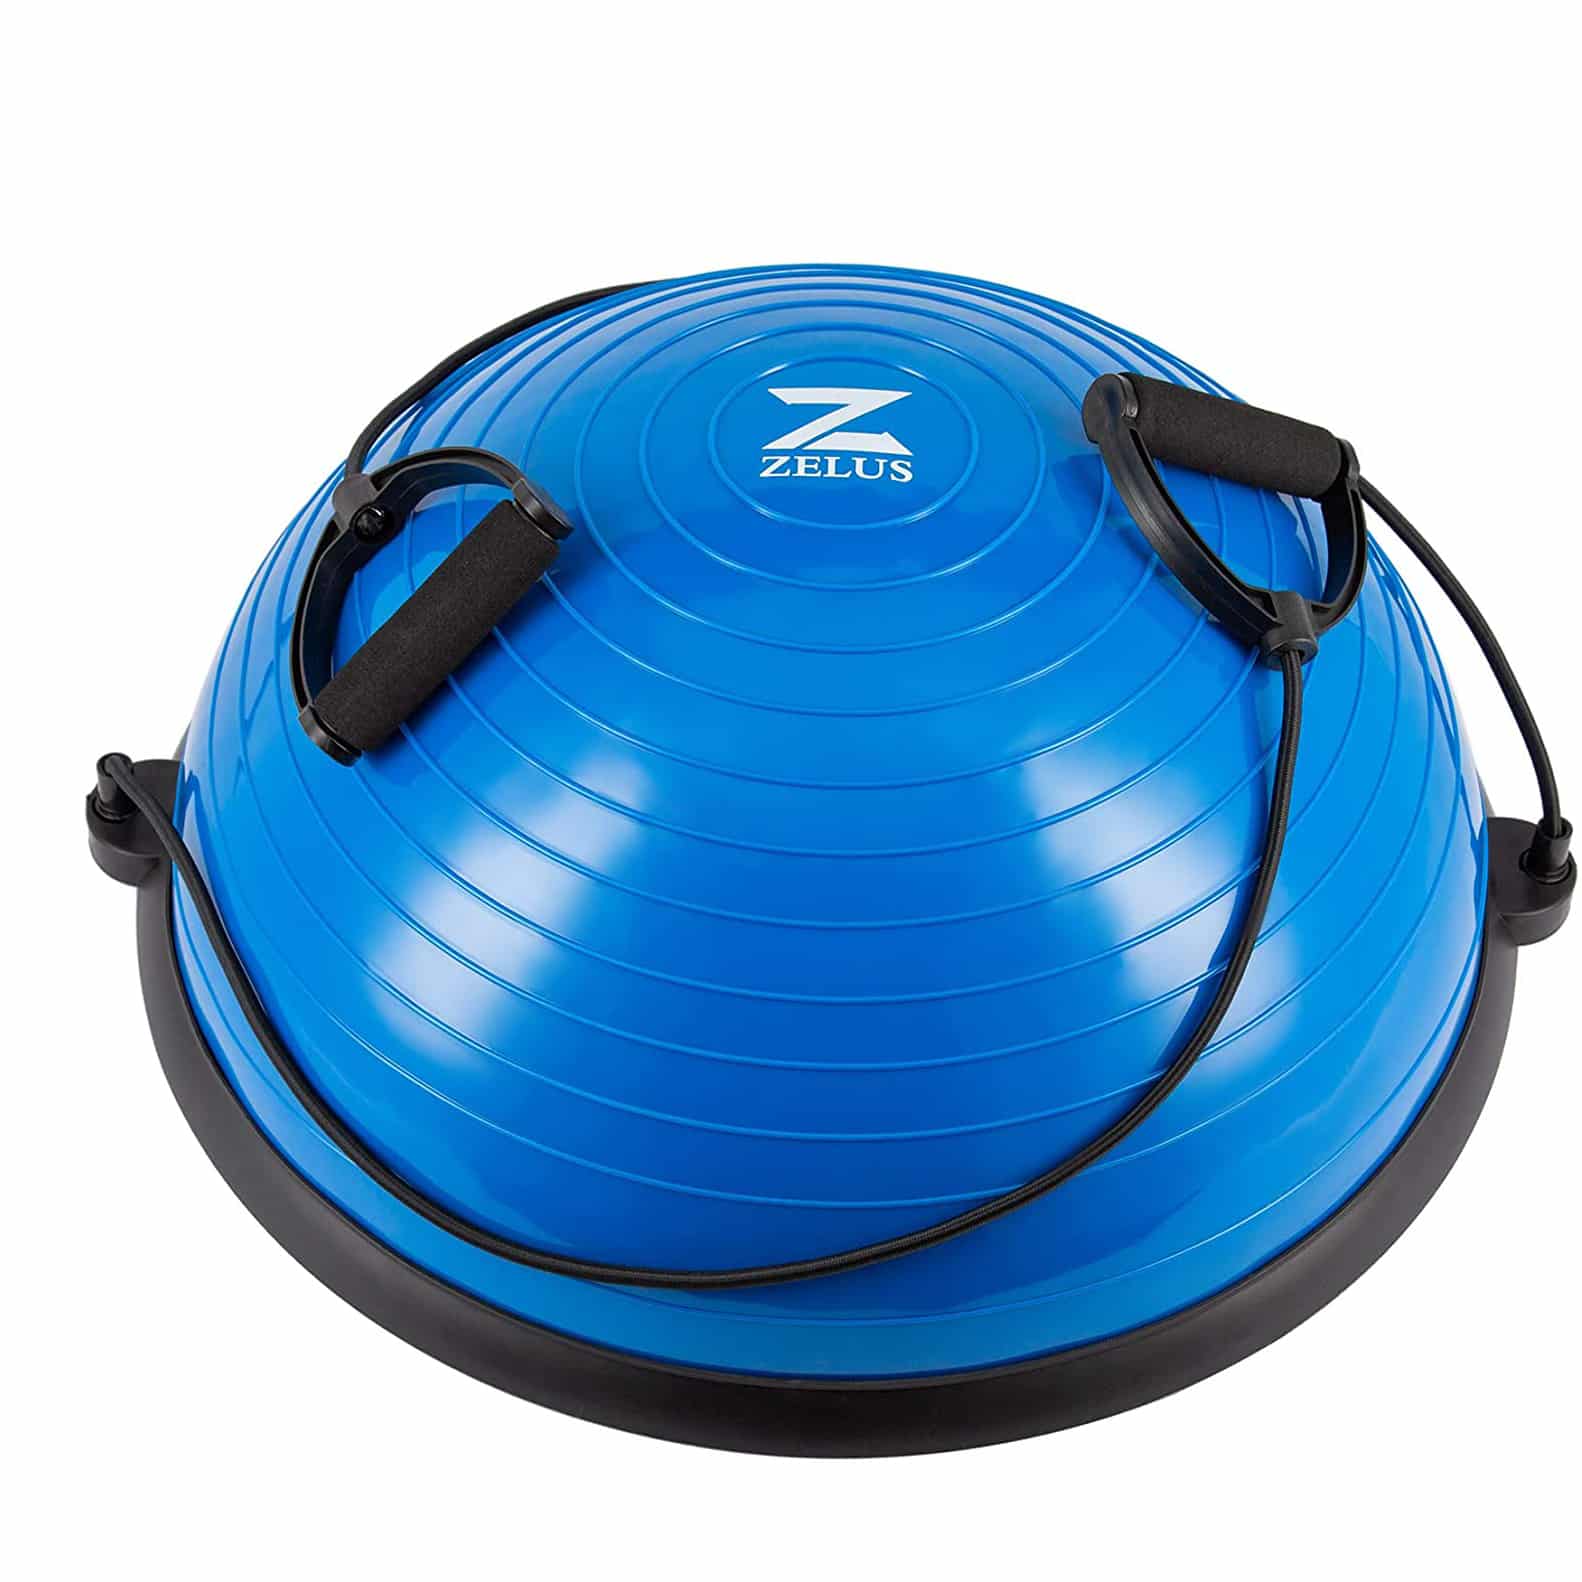 2. ZELUS Balance Ball Trainer 2 